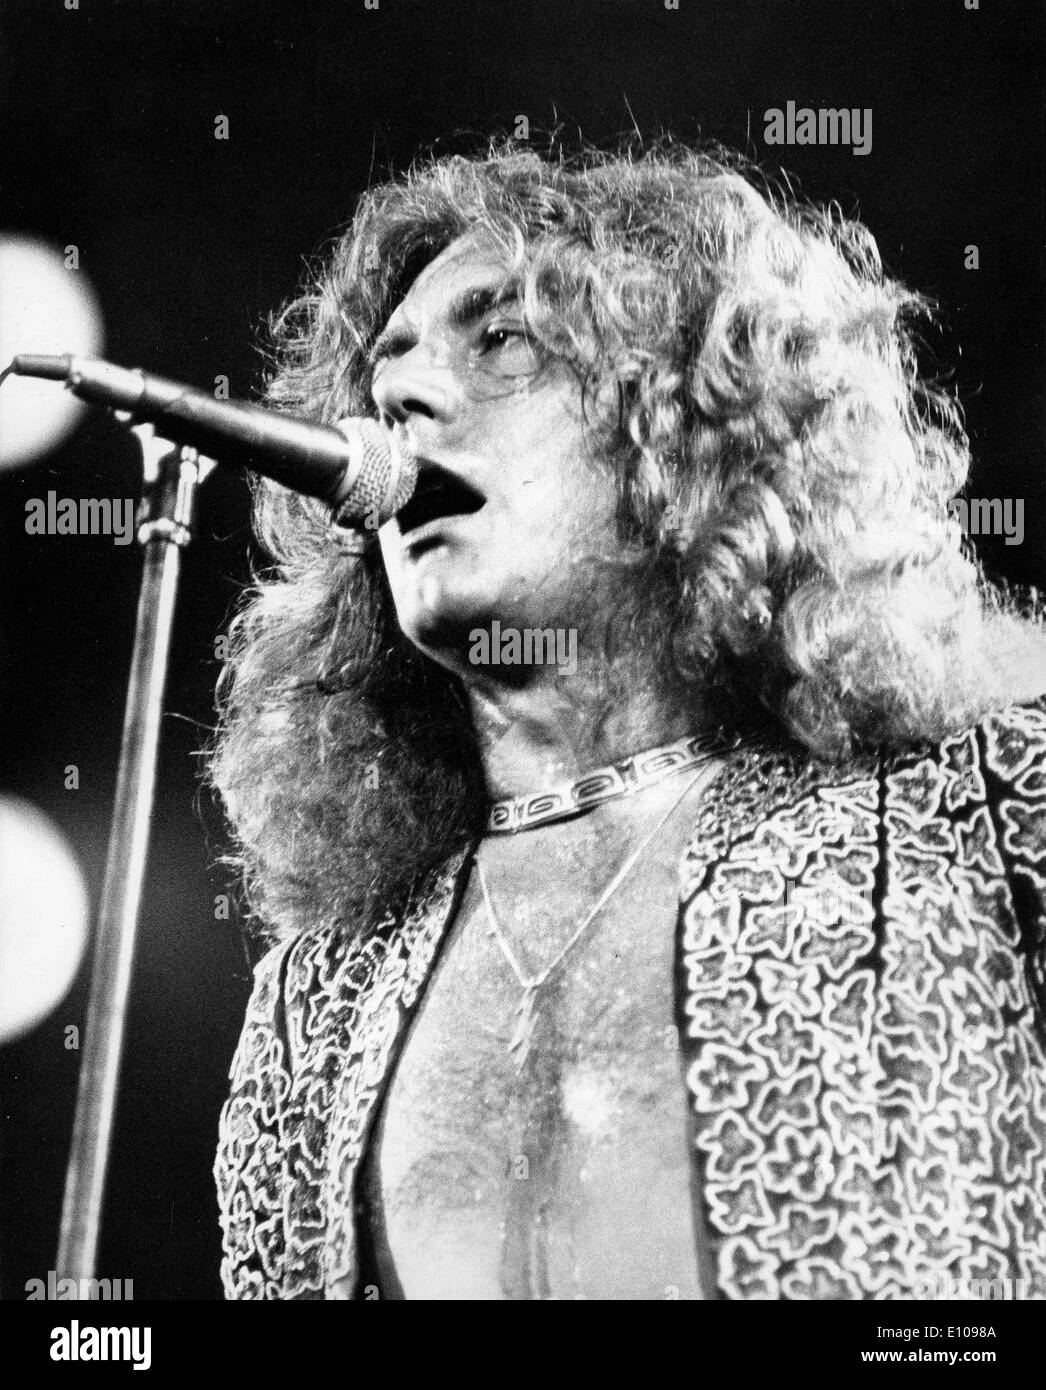 Led Zeppelin cantante Robert Plant en concierto Foto de stock